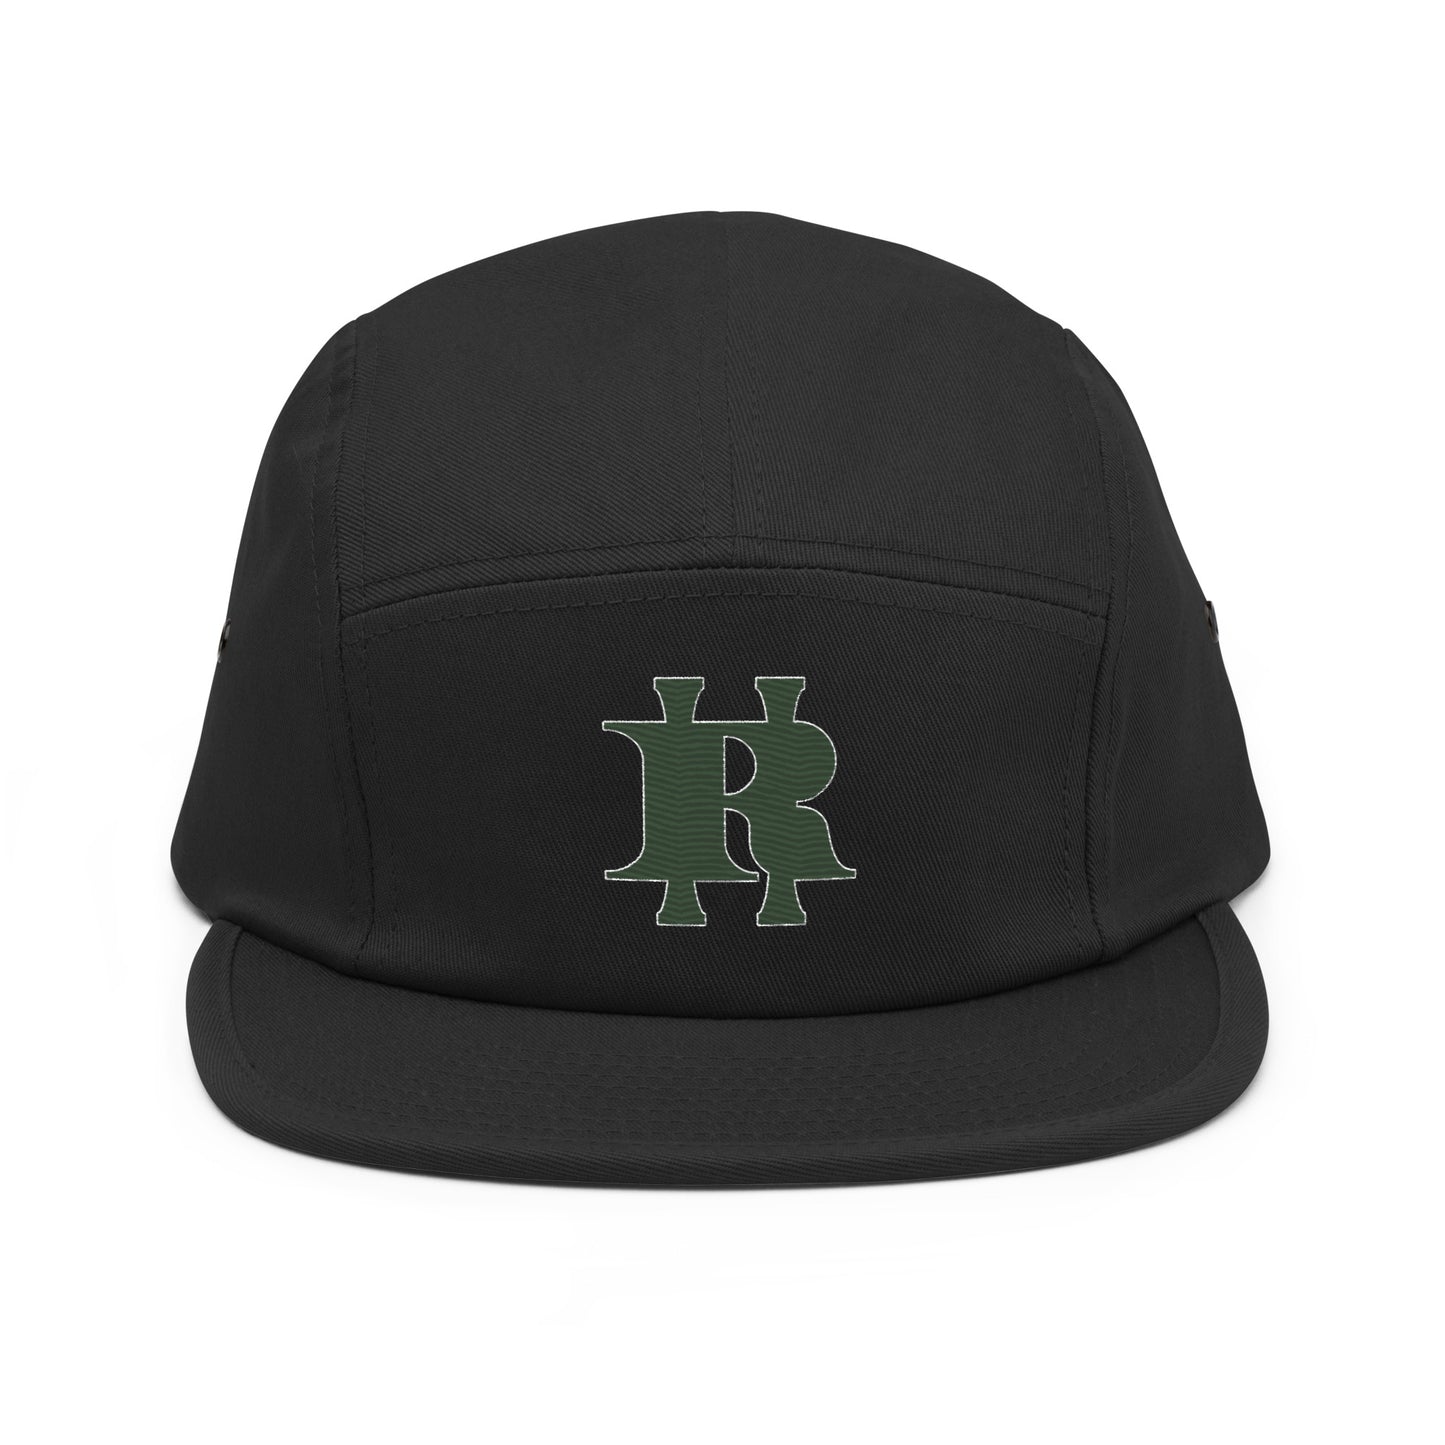 New Money Black Camp Hat